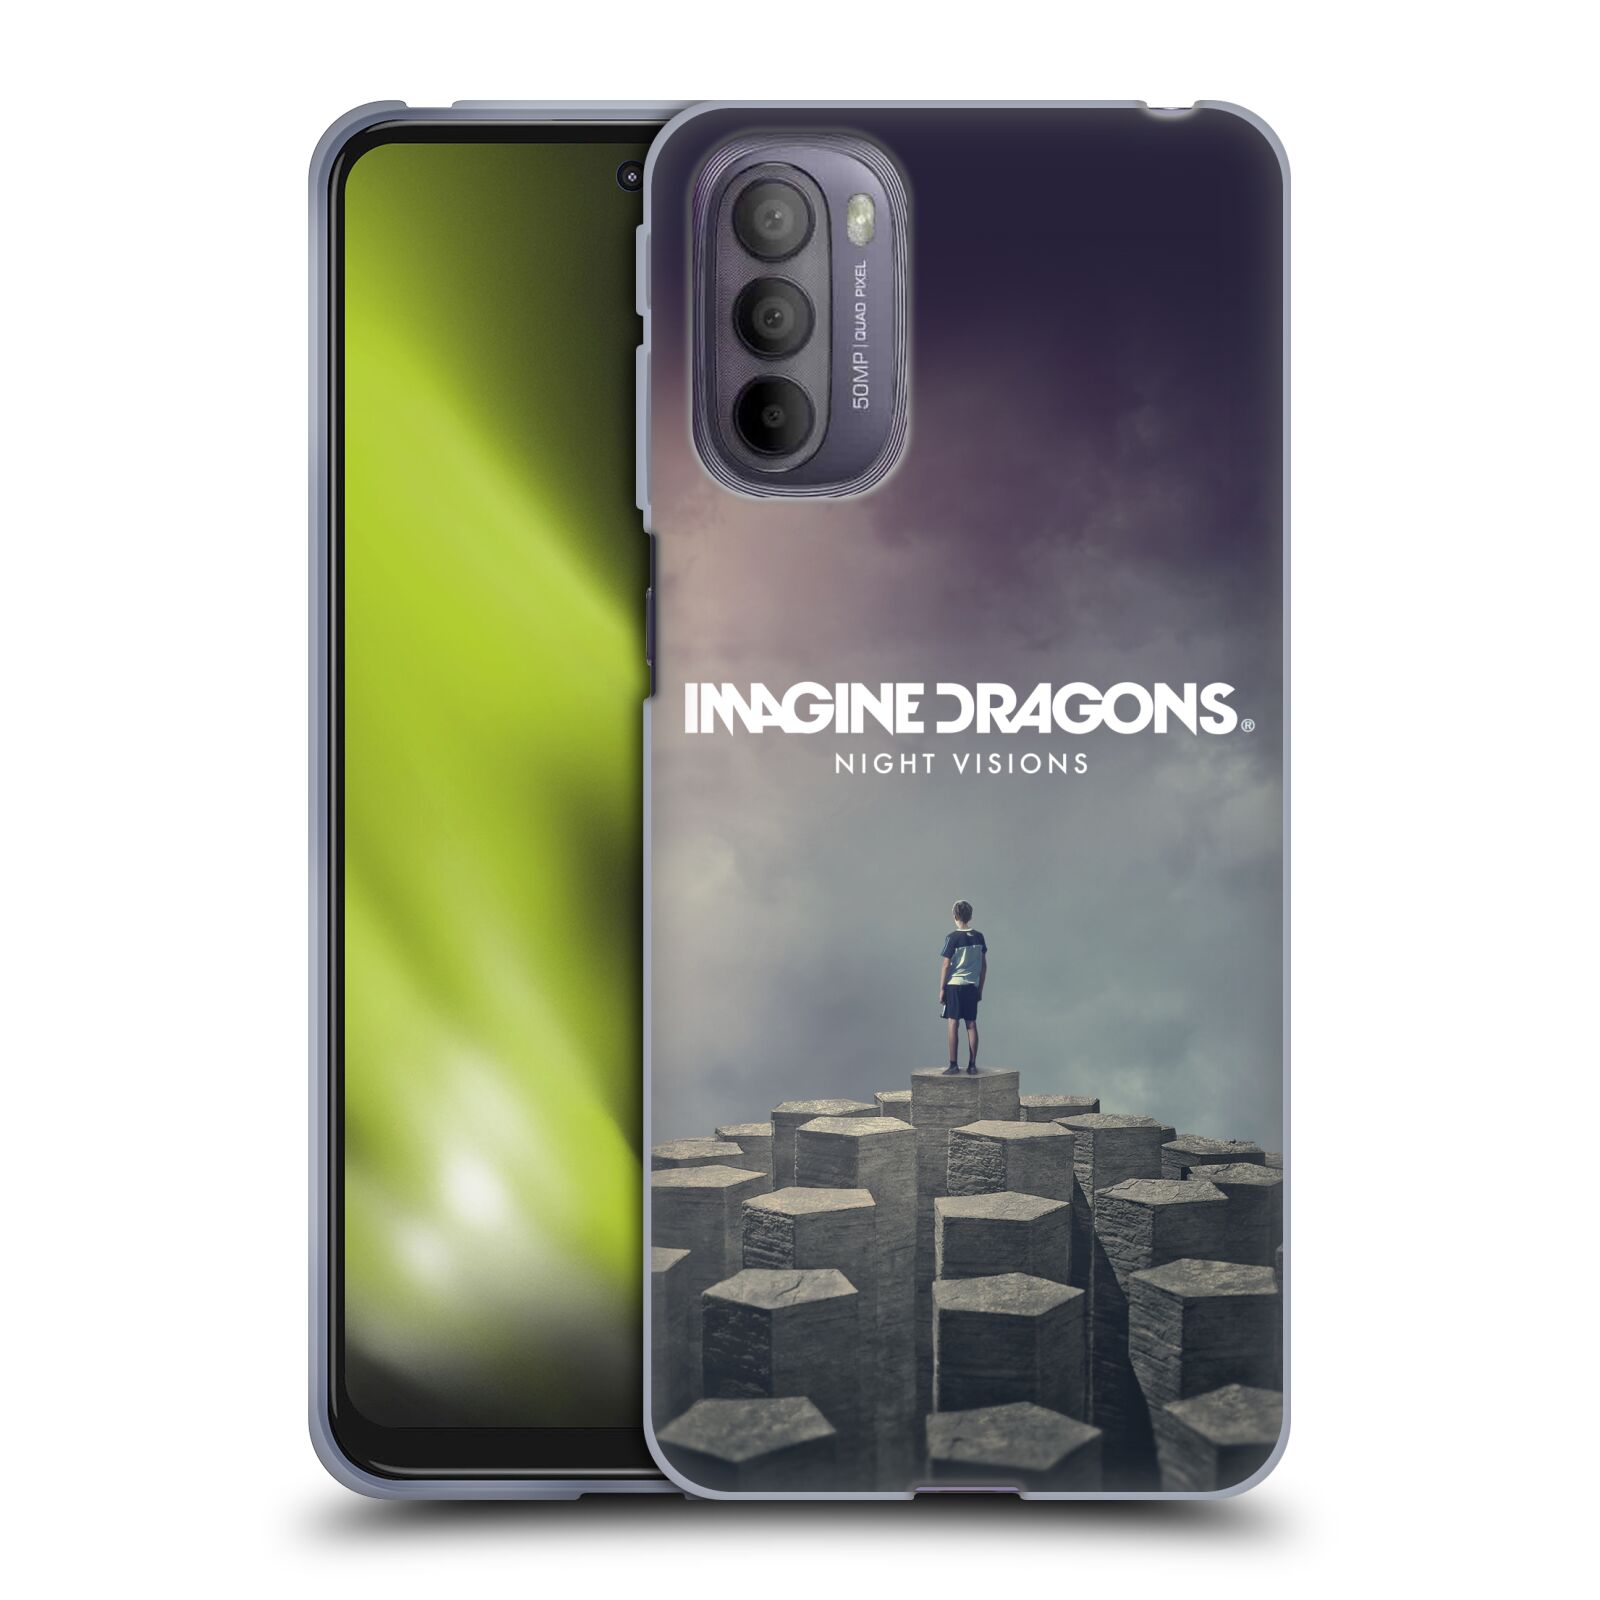 Silikonové pouzdro na mobil Motorola Moto G31 - Imagine Dragons - Night Visions